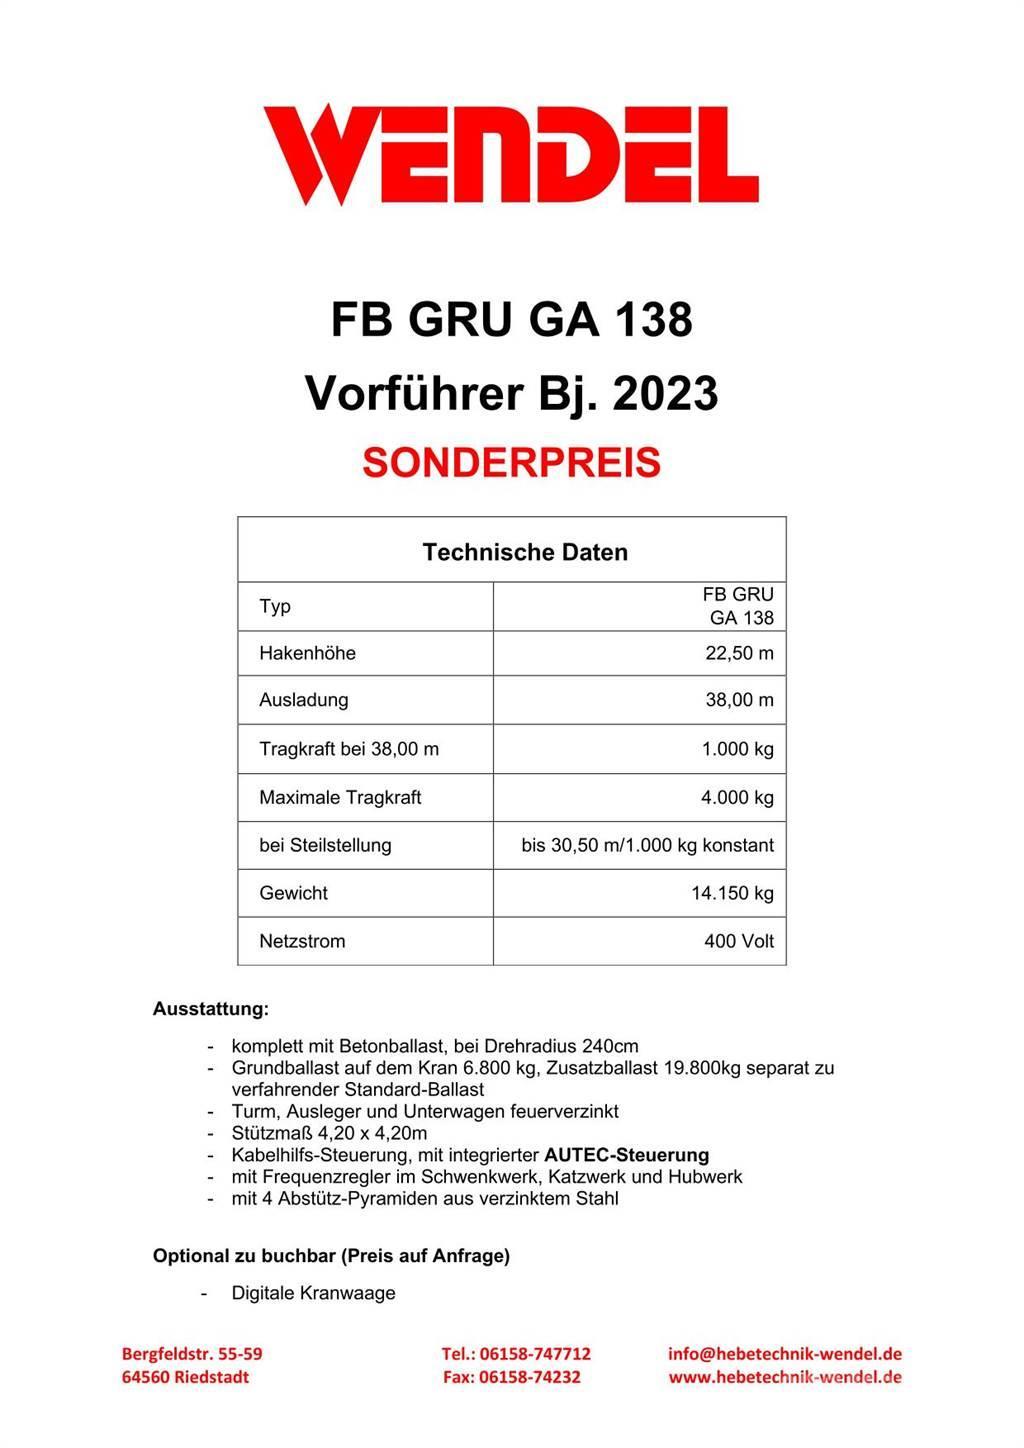 FB GRU Hochbaukran GA 138 Macarale turn